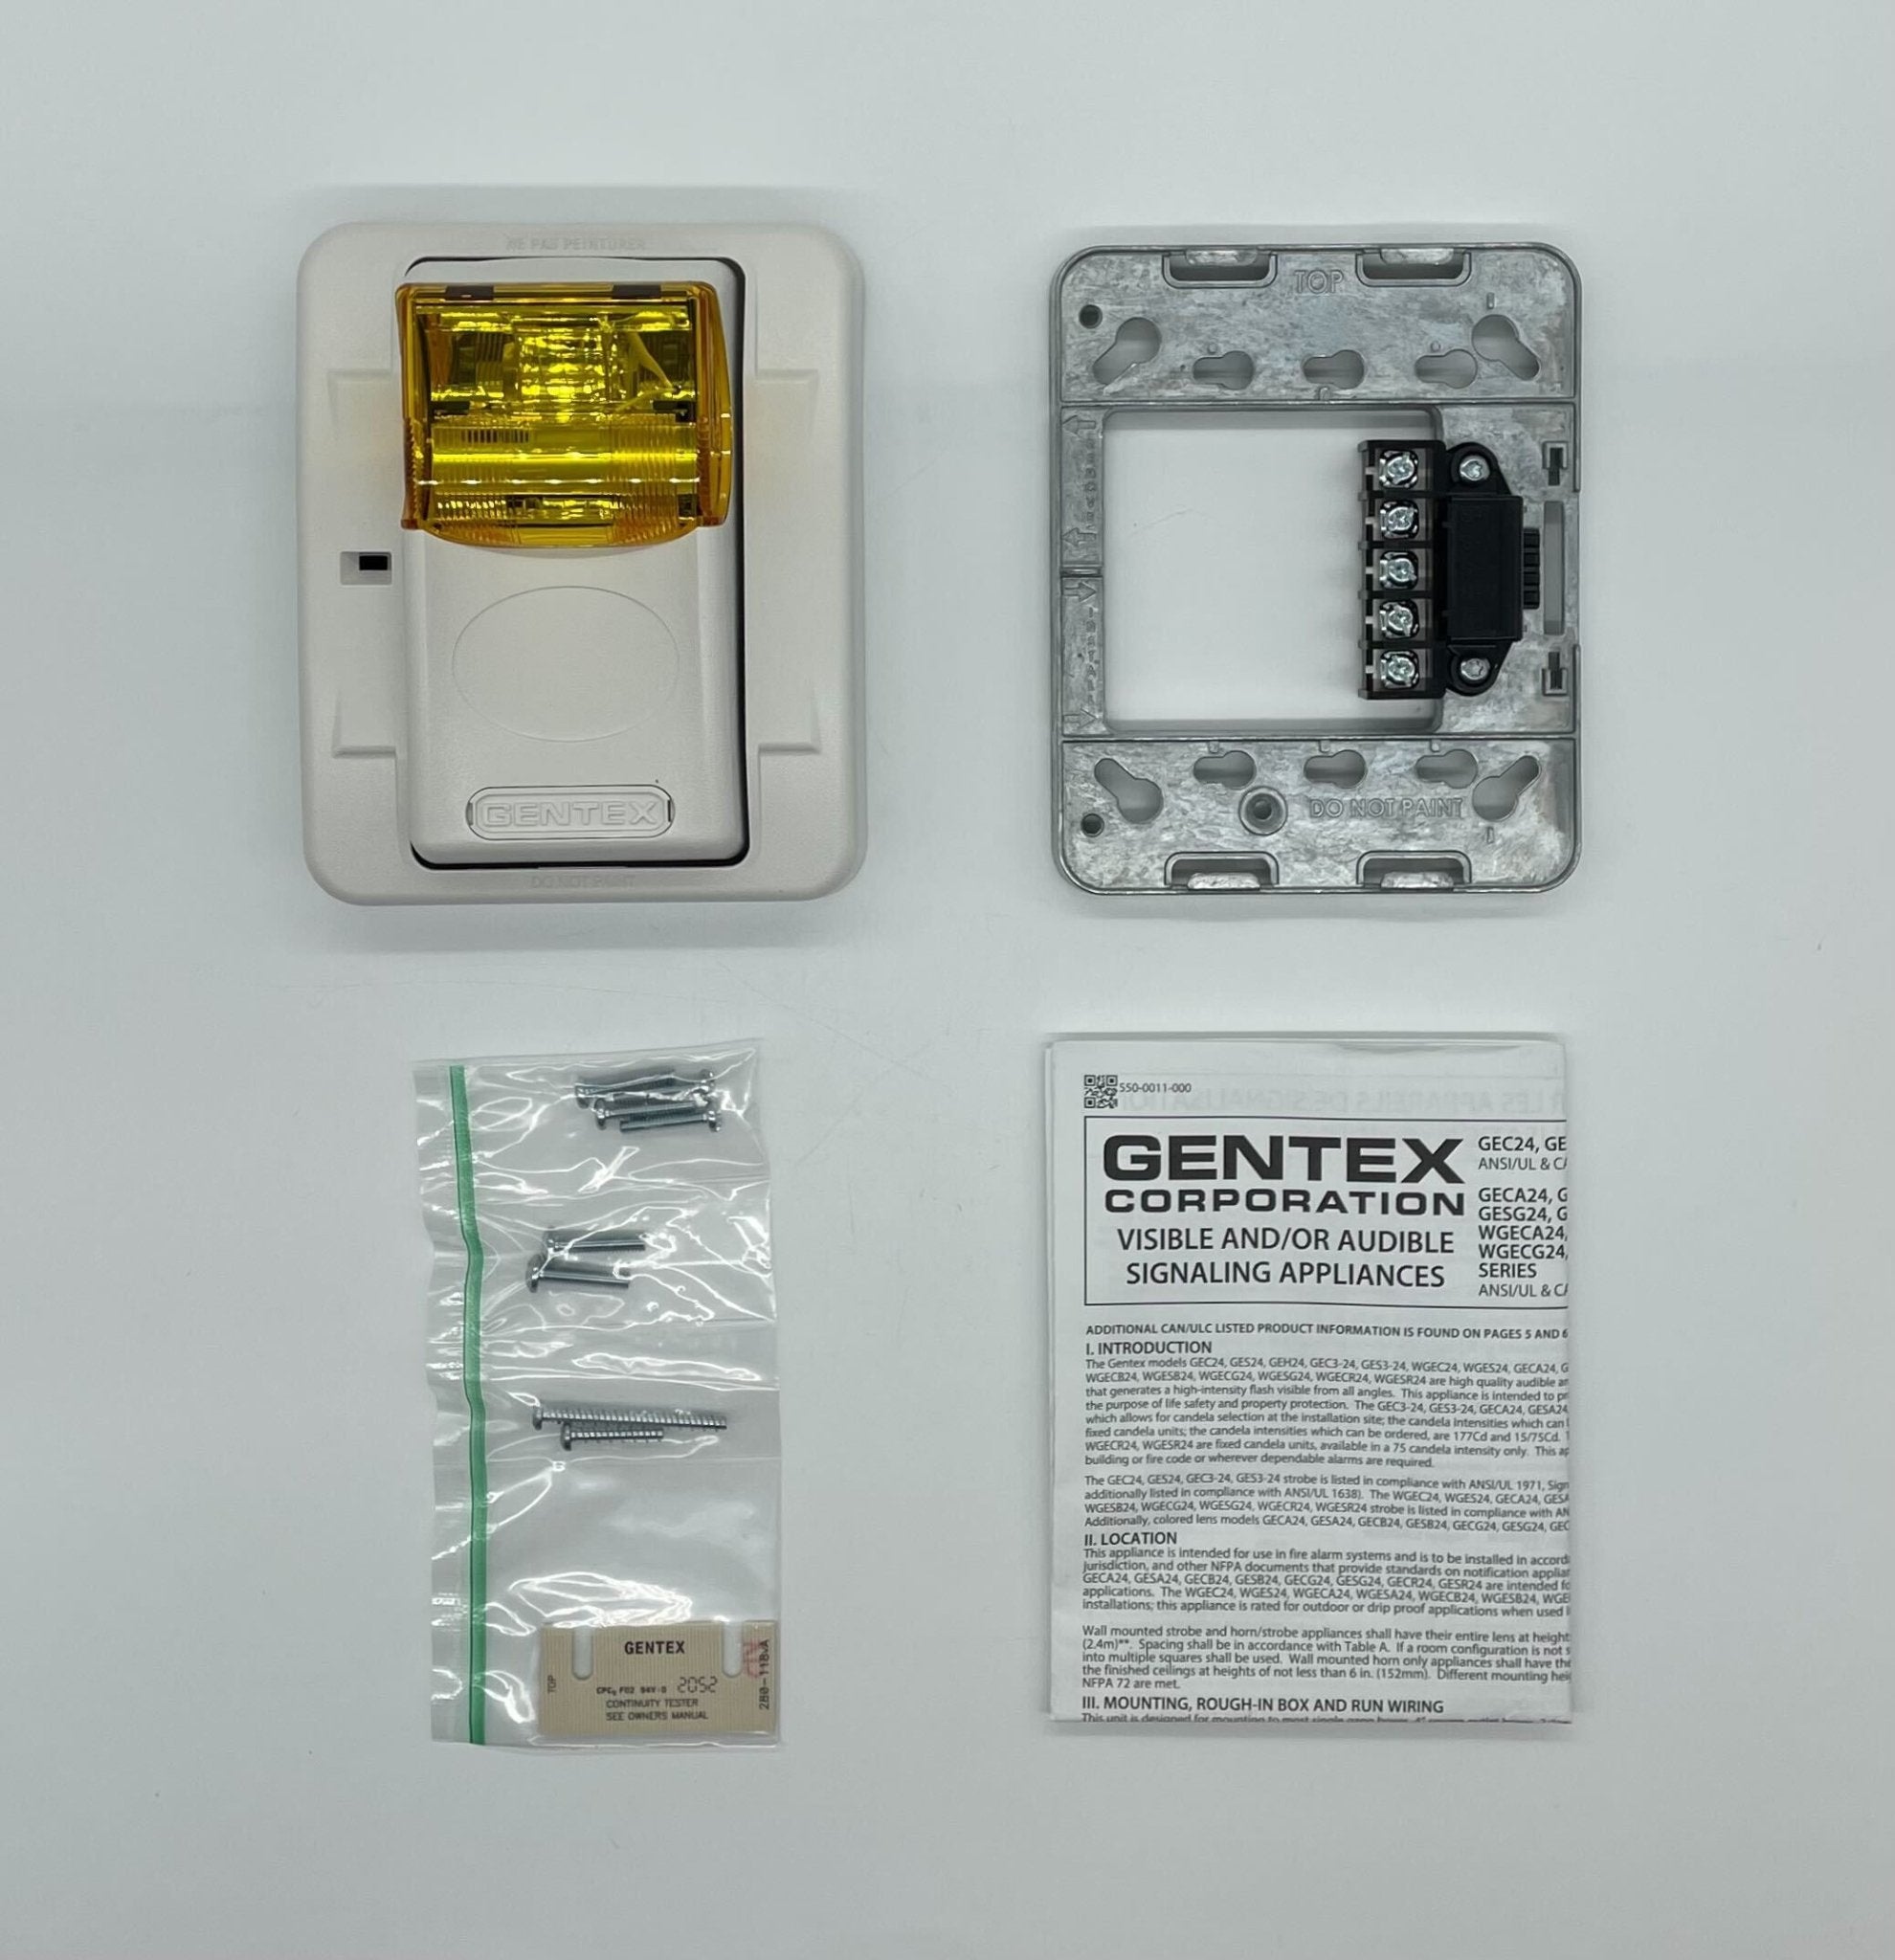 Gentex GESA24PWW - The Fire Alarm Supplier